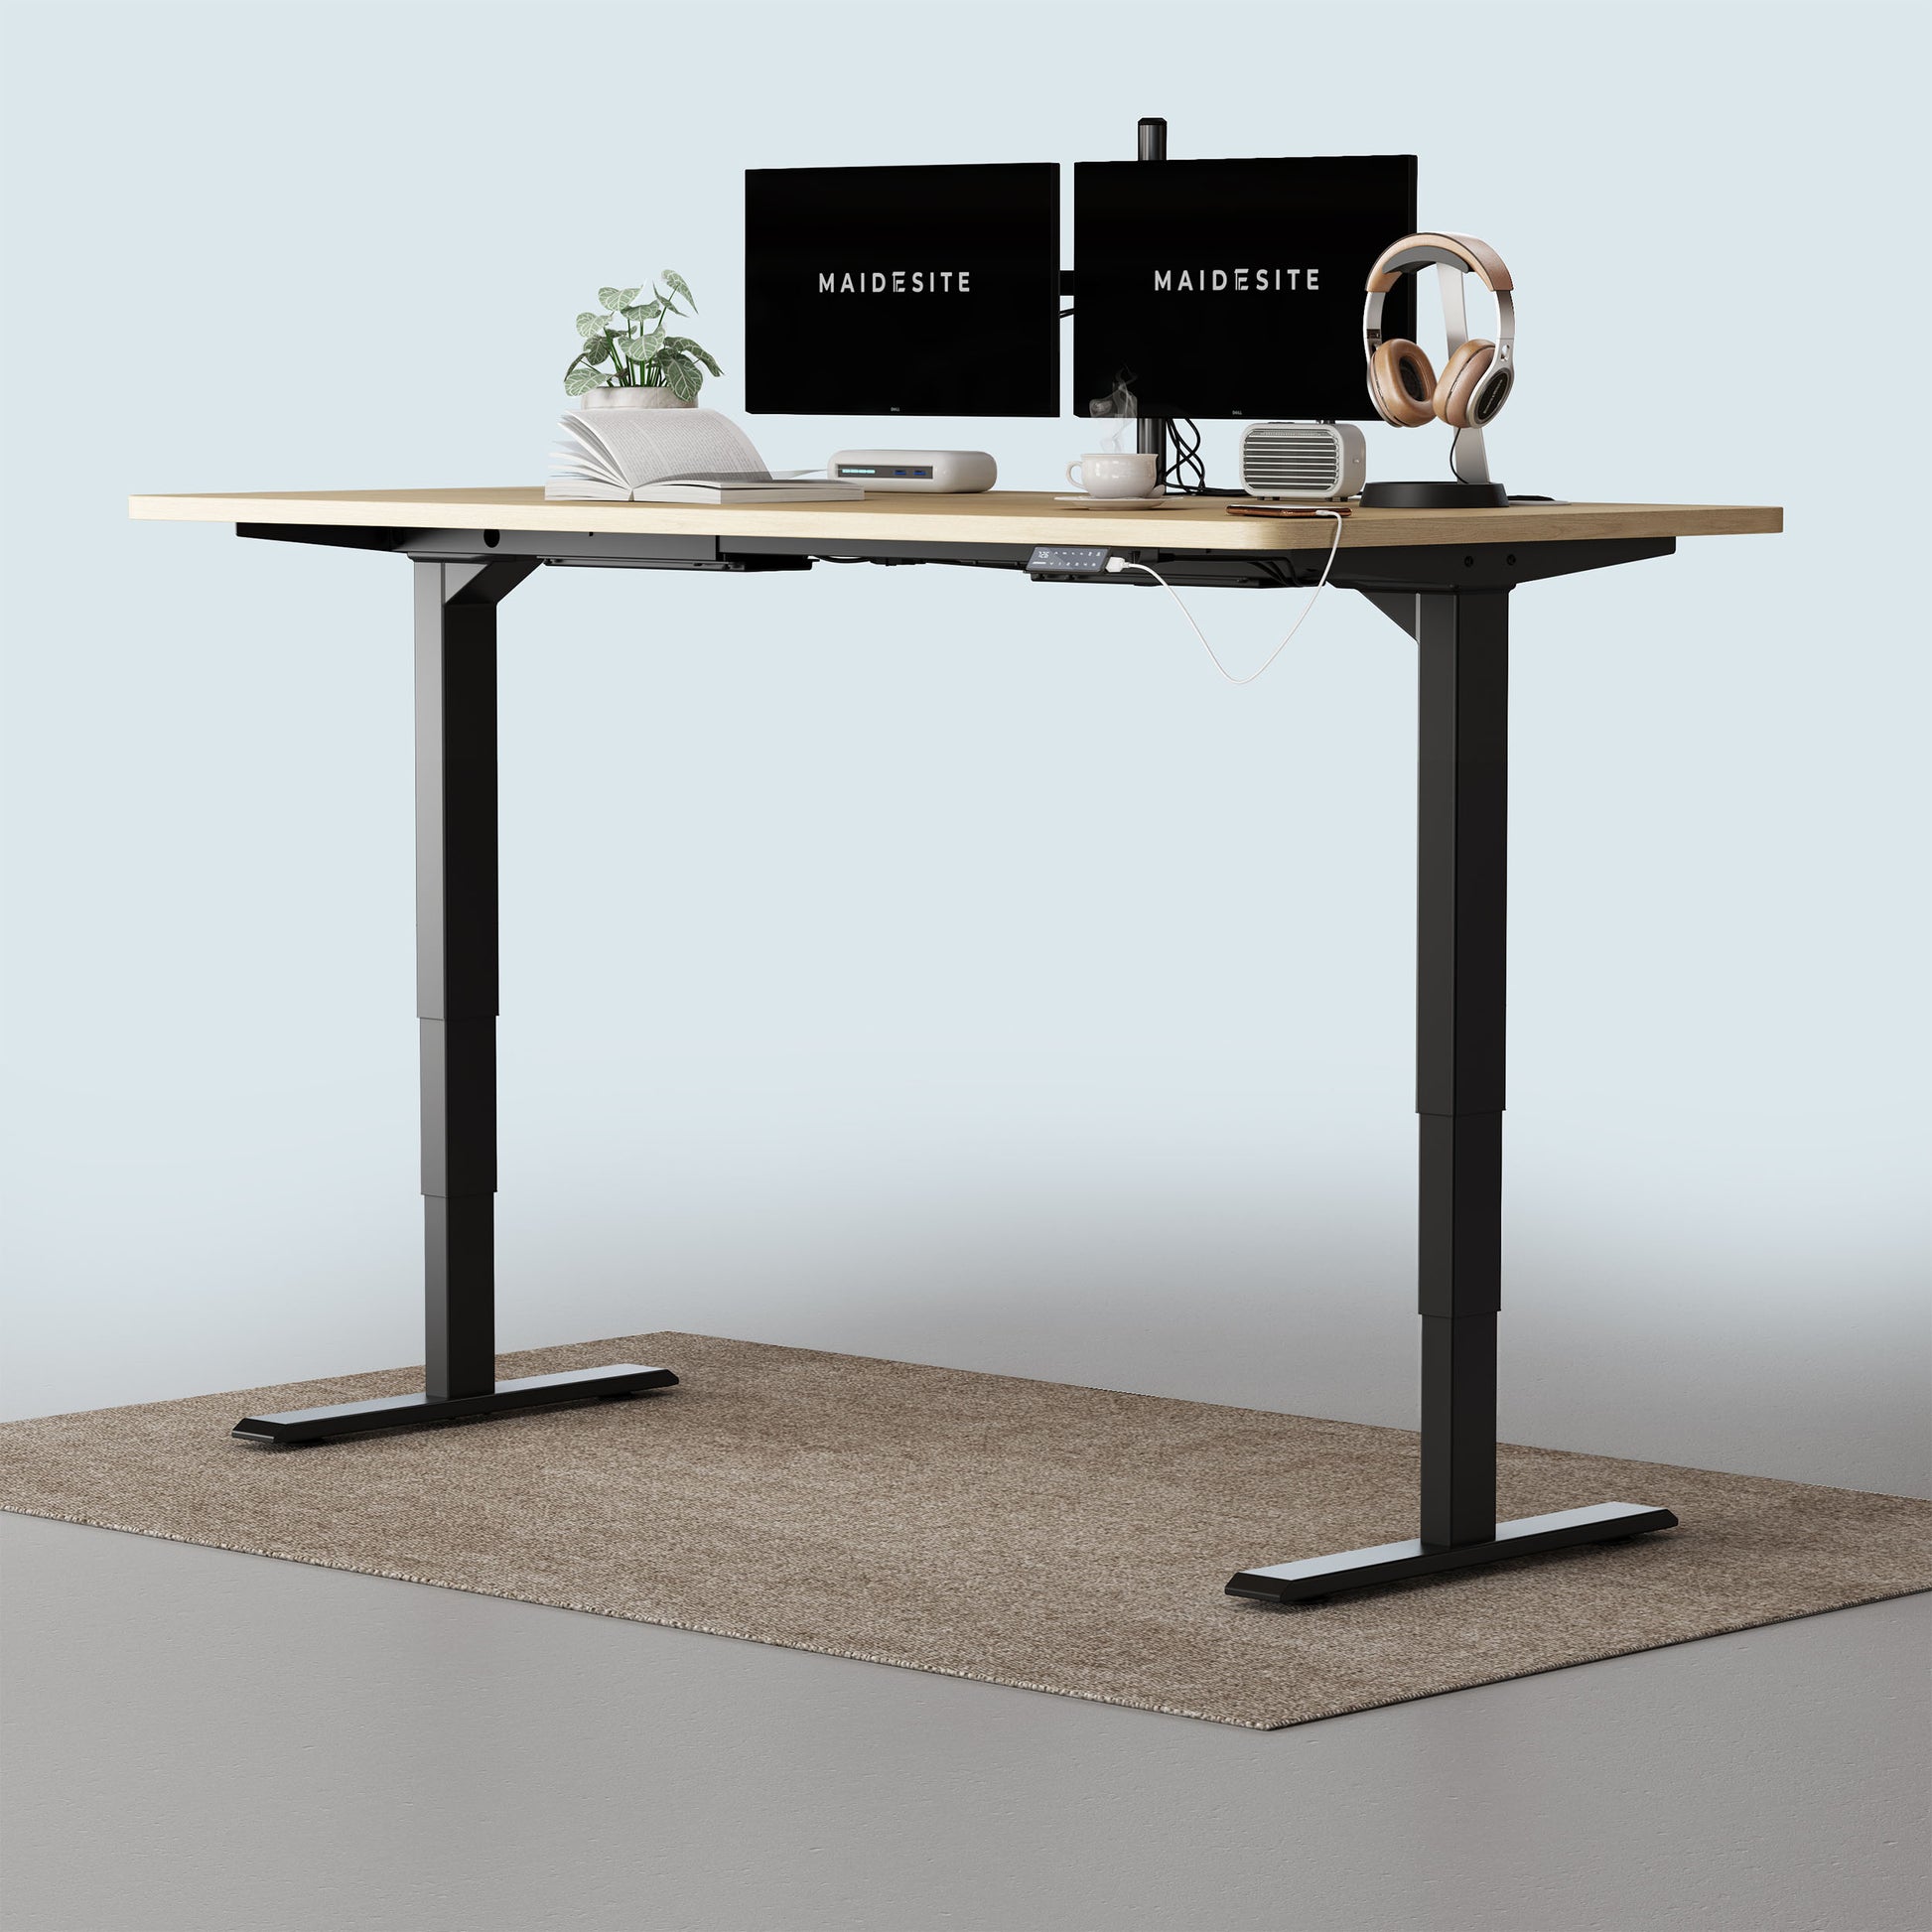 T2 Pro Plus standing desk black frame and 140x70cm desktop